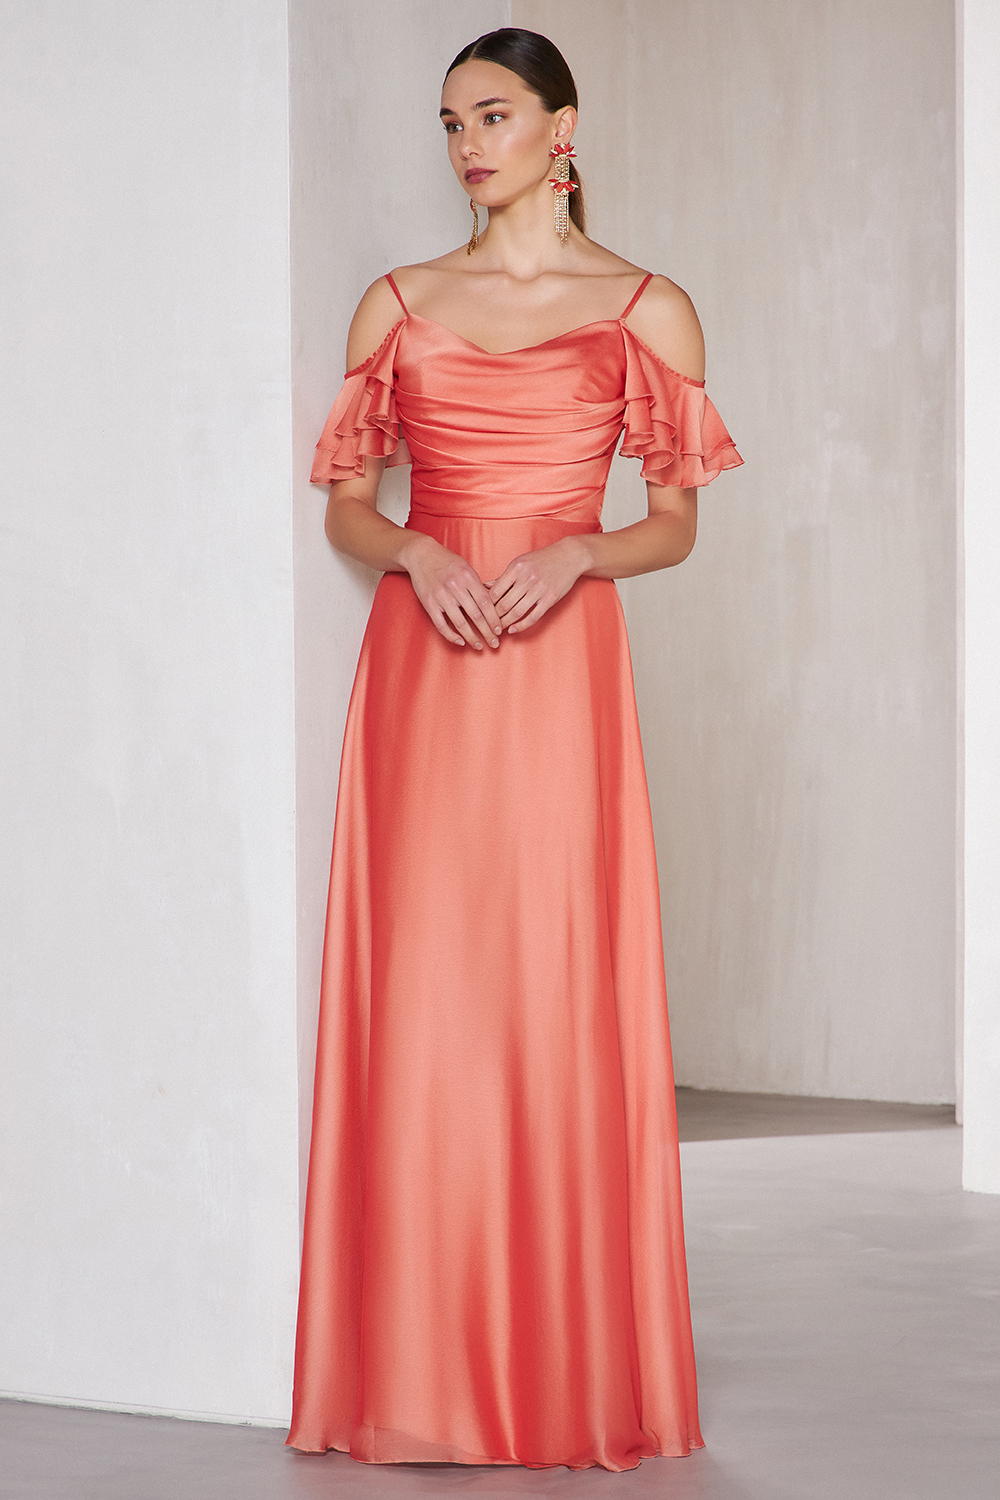 Коктейльные платья / Long cocktail dress with shining fabric and sleeves